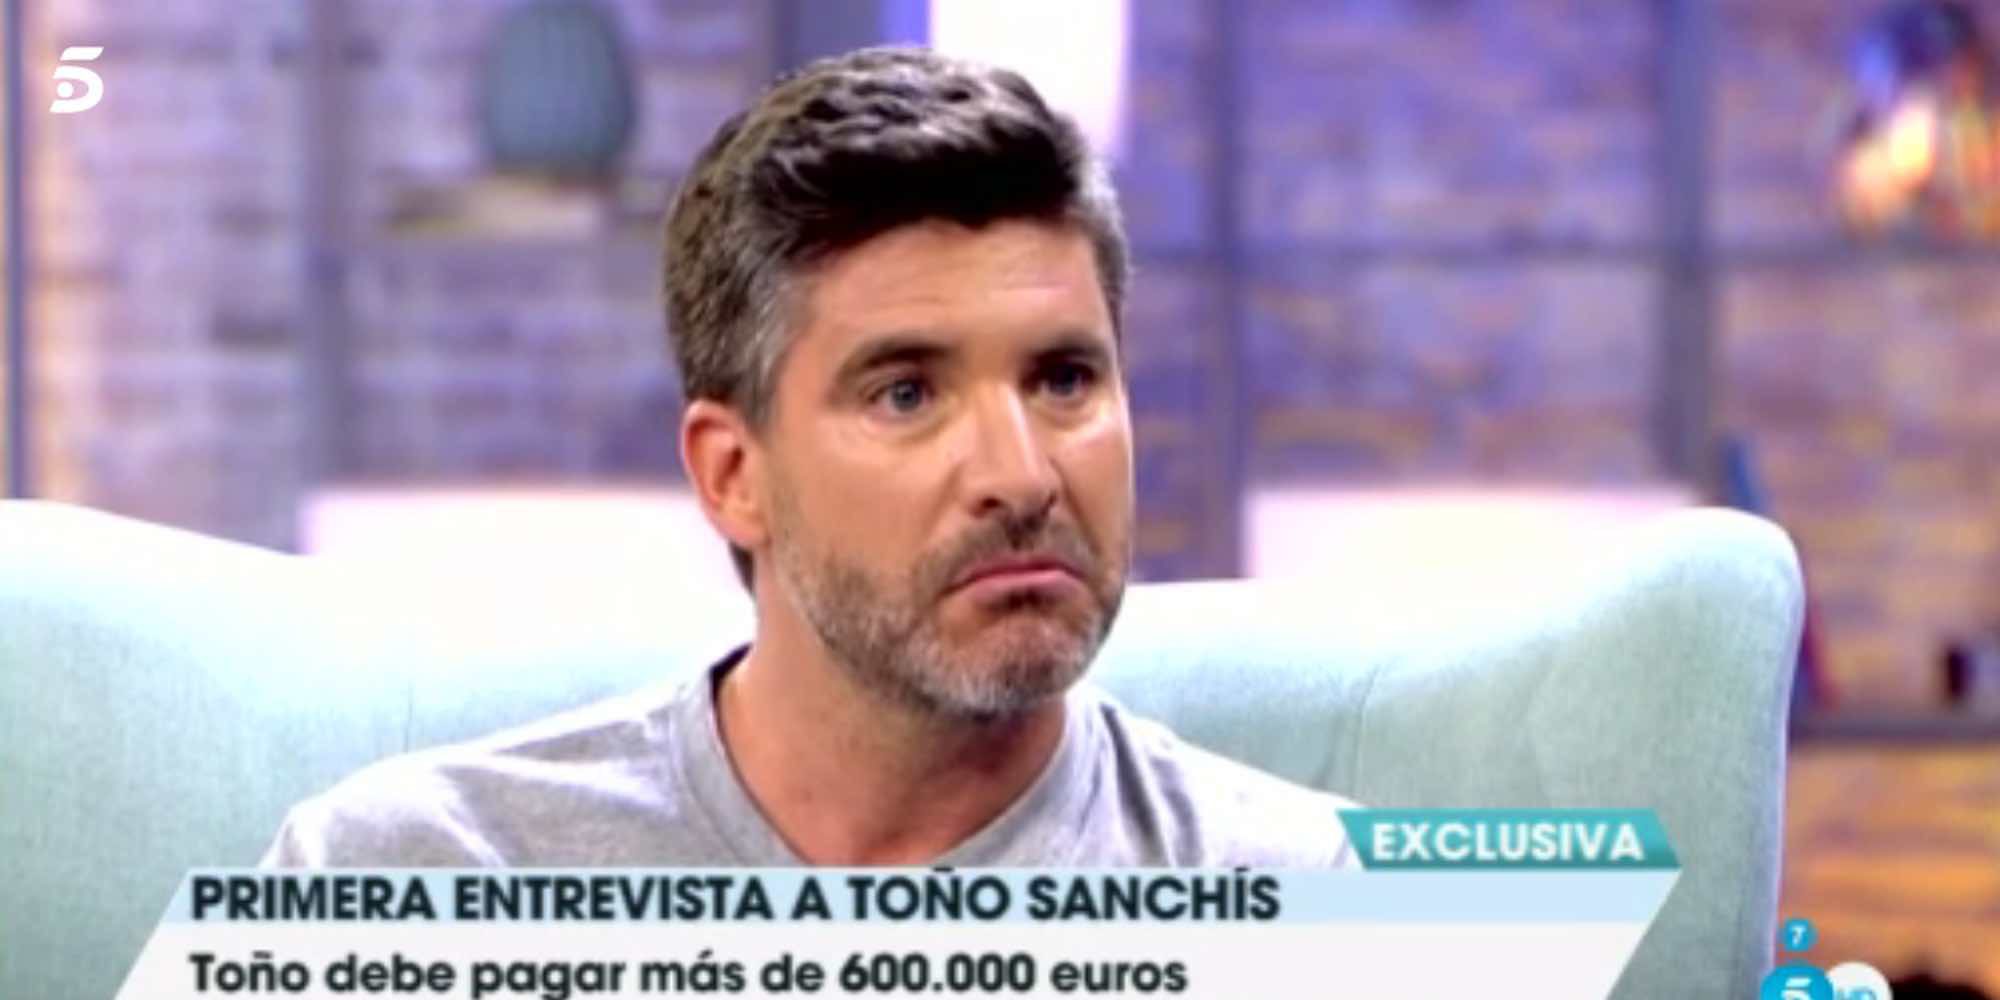 El reproche de Toño Sanchís a la Justicia: "Planteé firmar para demostrar que no falsifiqué su firma"